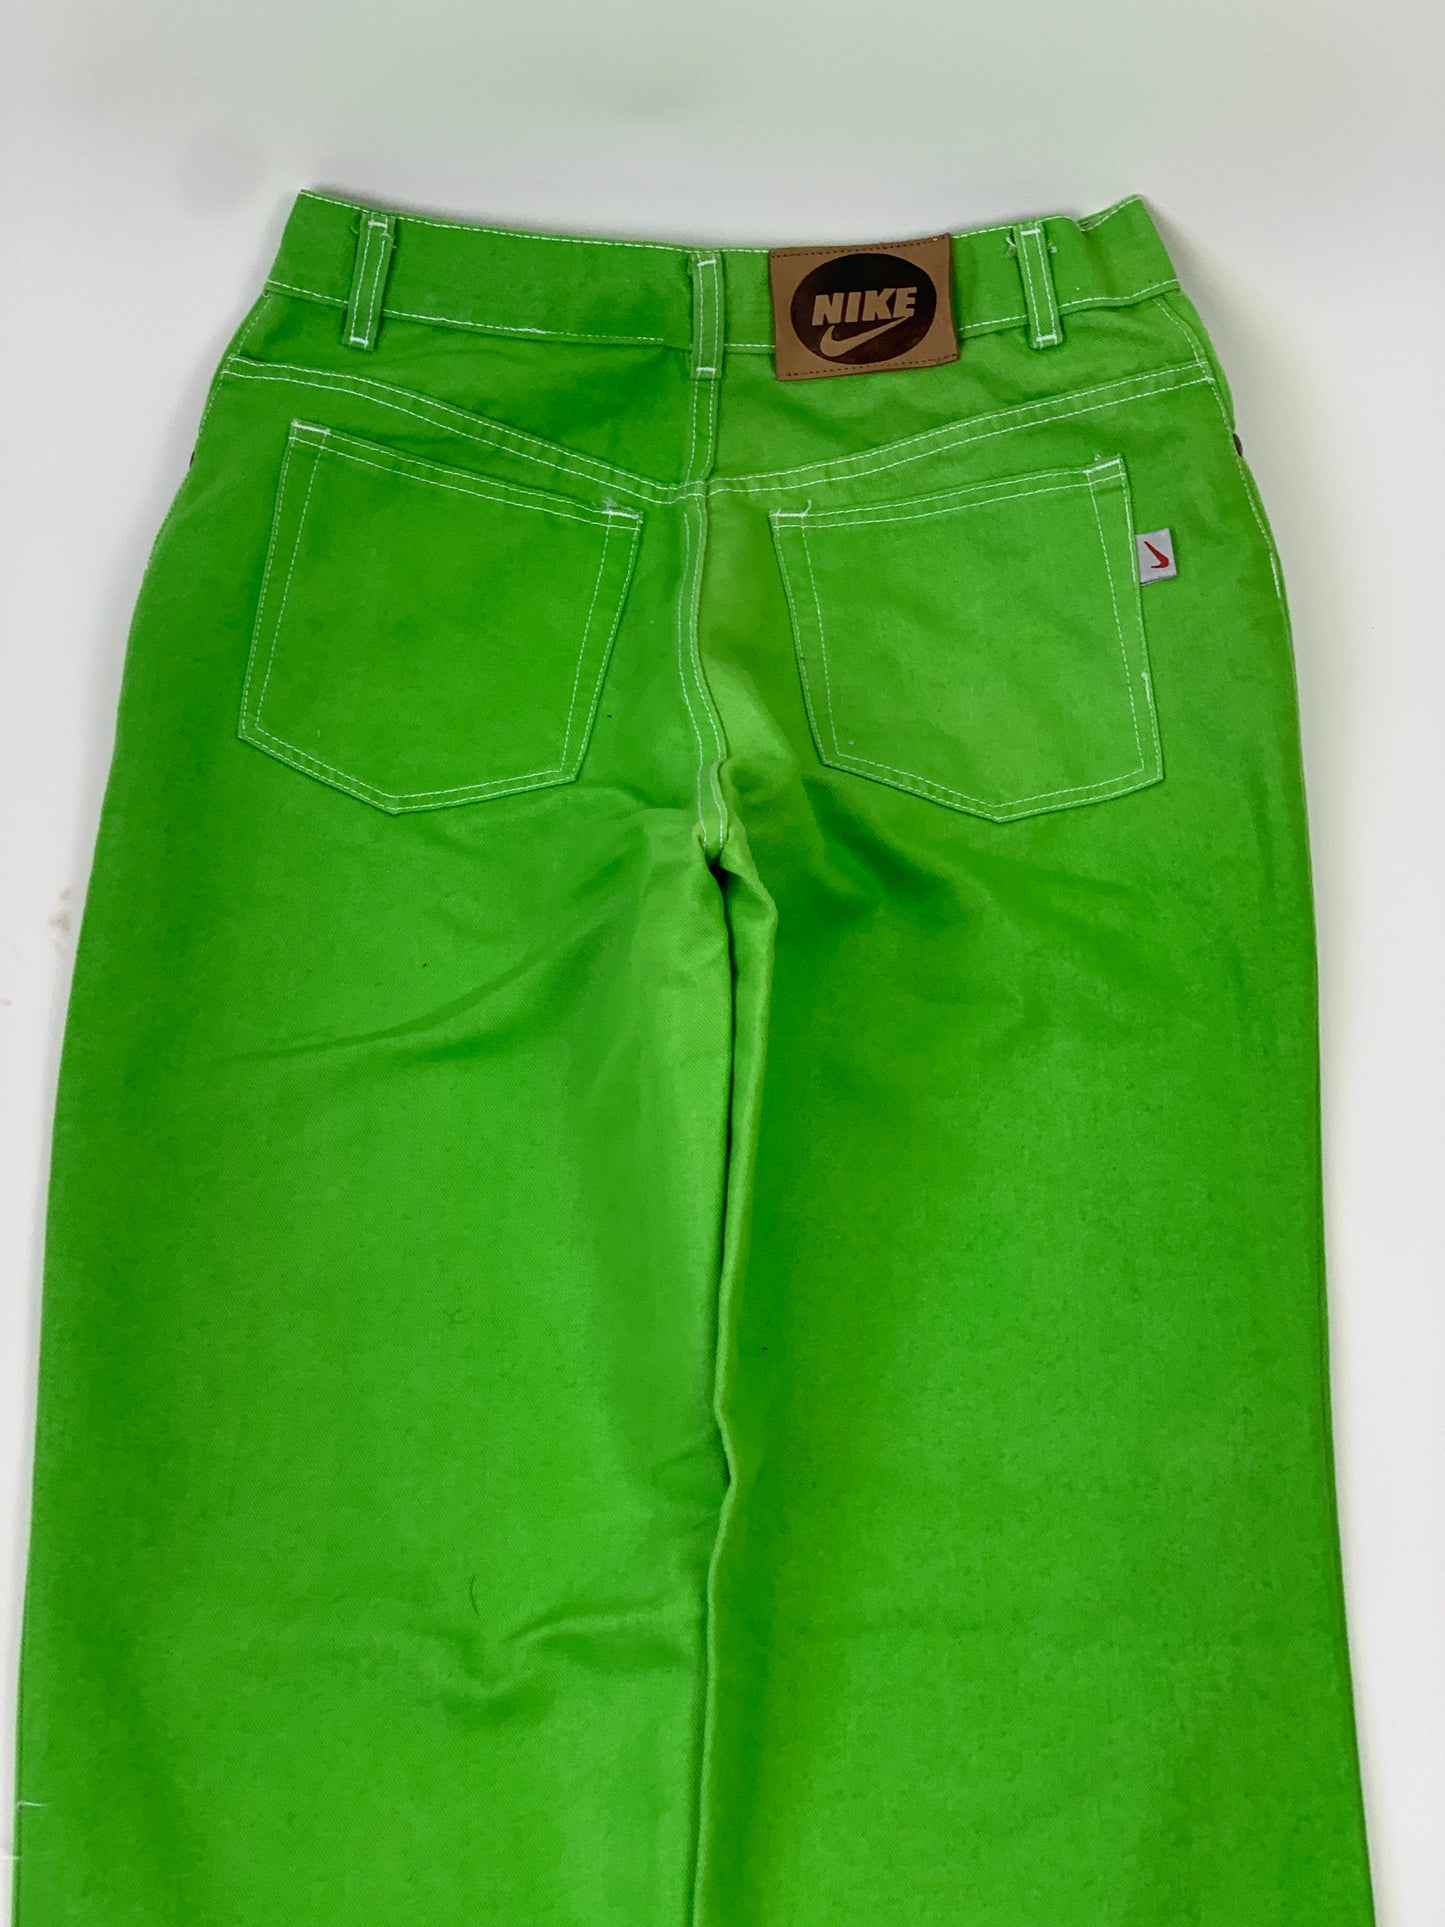 Nike Vintage Lime Jeans - 30